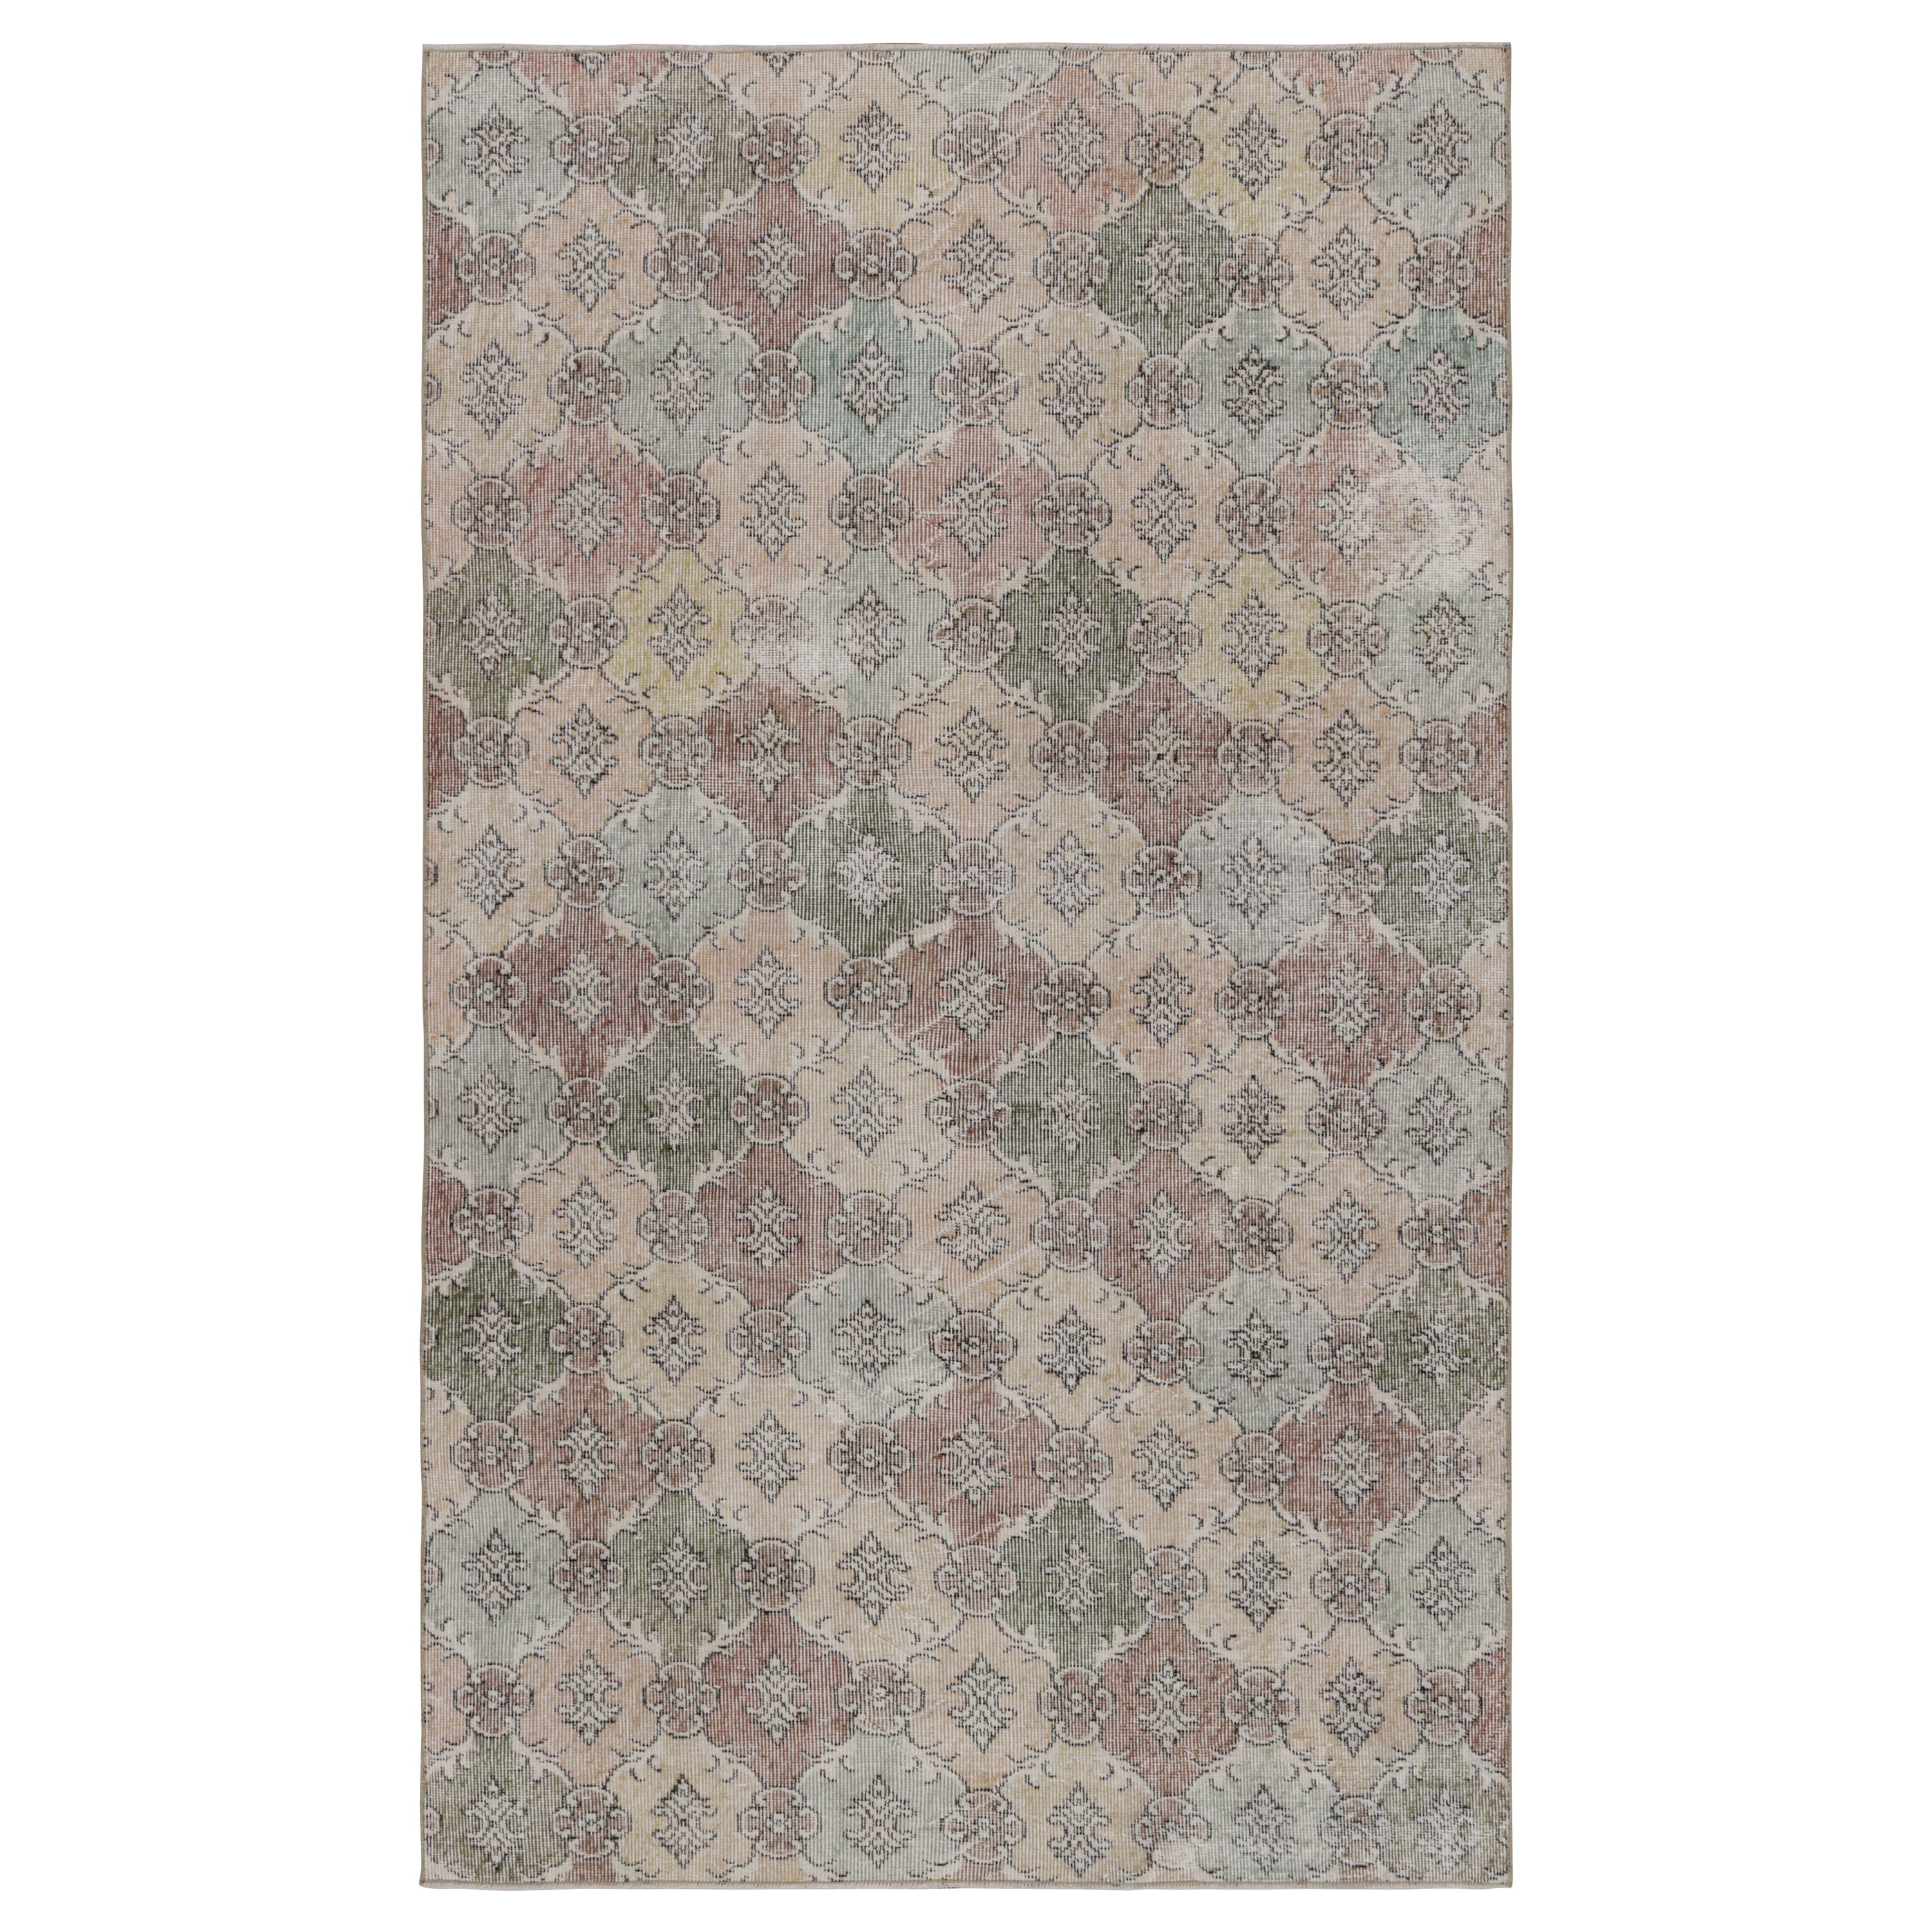 Vintage Zeki Müren Rug, with Geometric Patterns, from Rug & Kilim